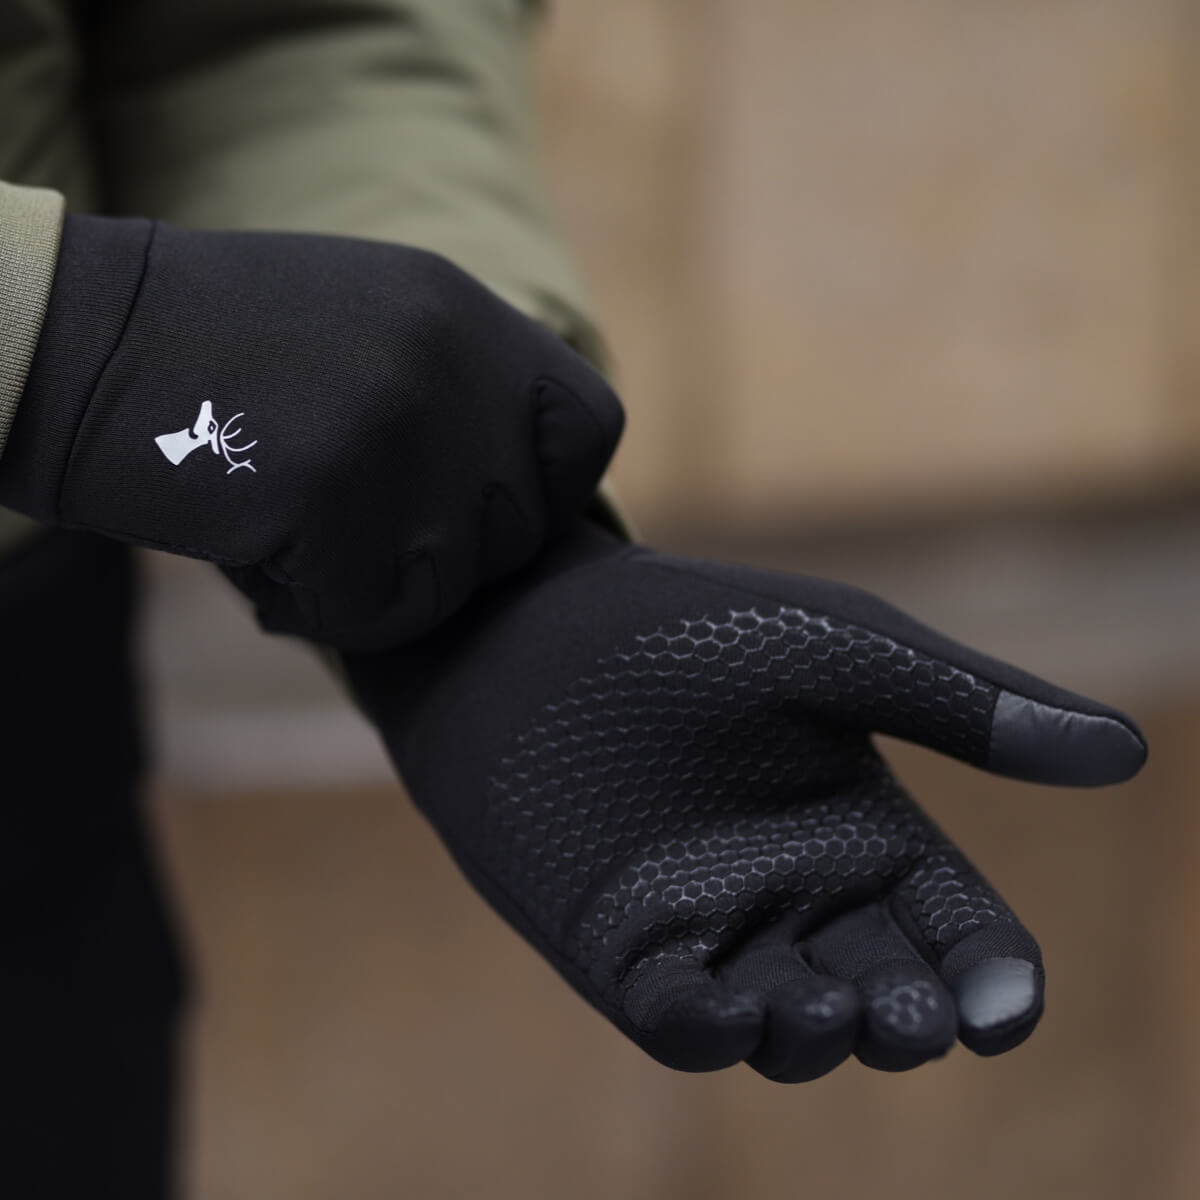 Spyder – Activity Gloves avec fonction tactile et antidérapant en silicone